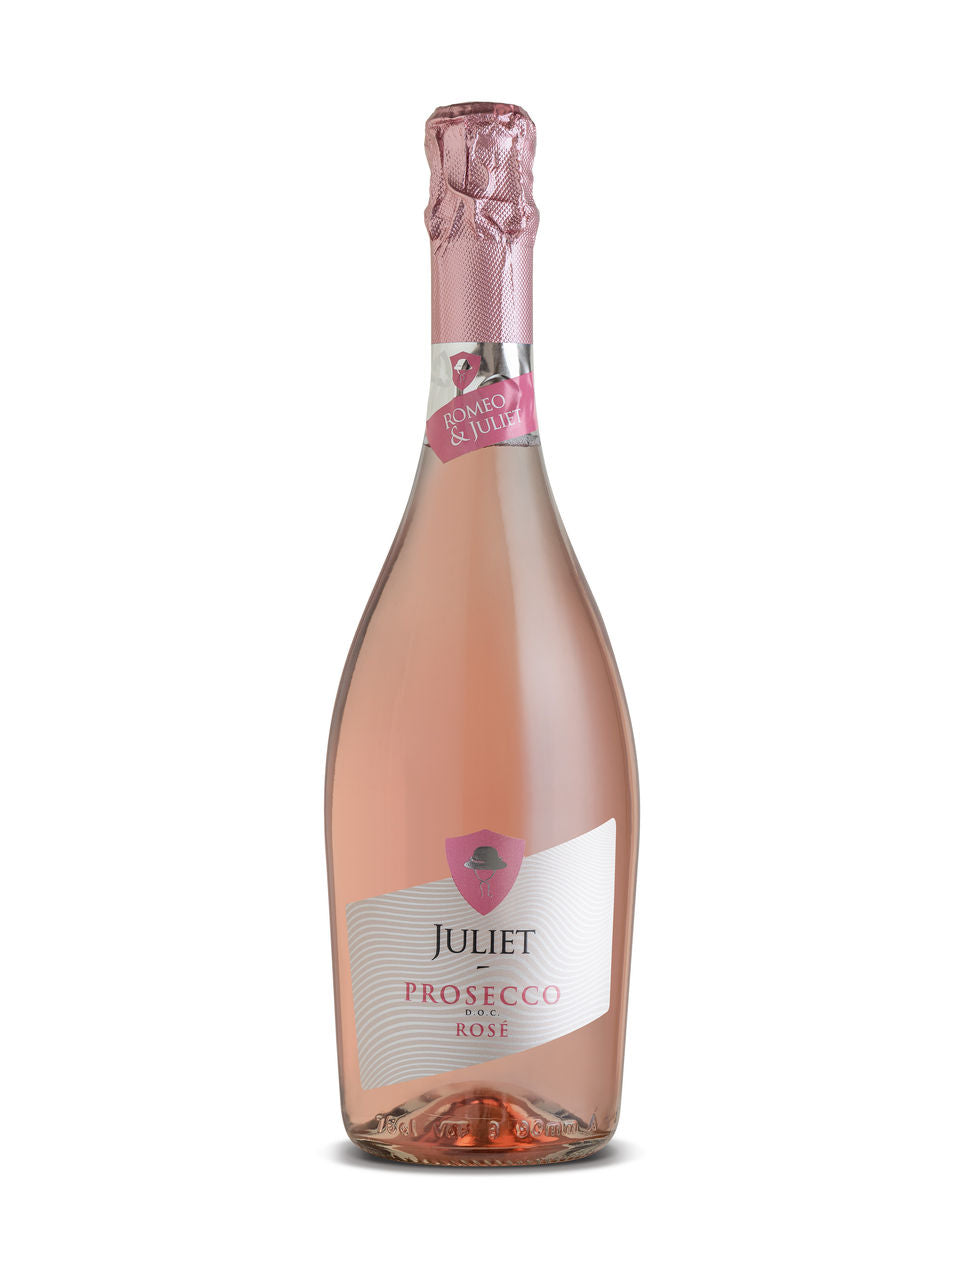 Juliet Prosecco Rose DOC 750 mL bottle